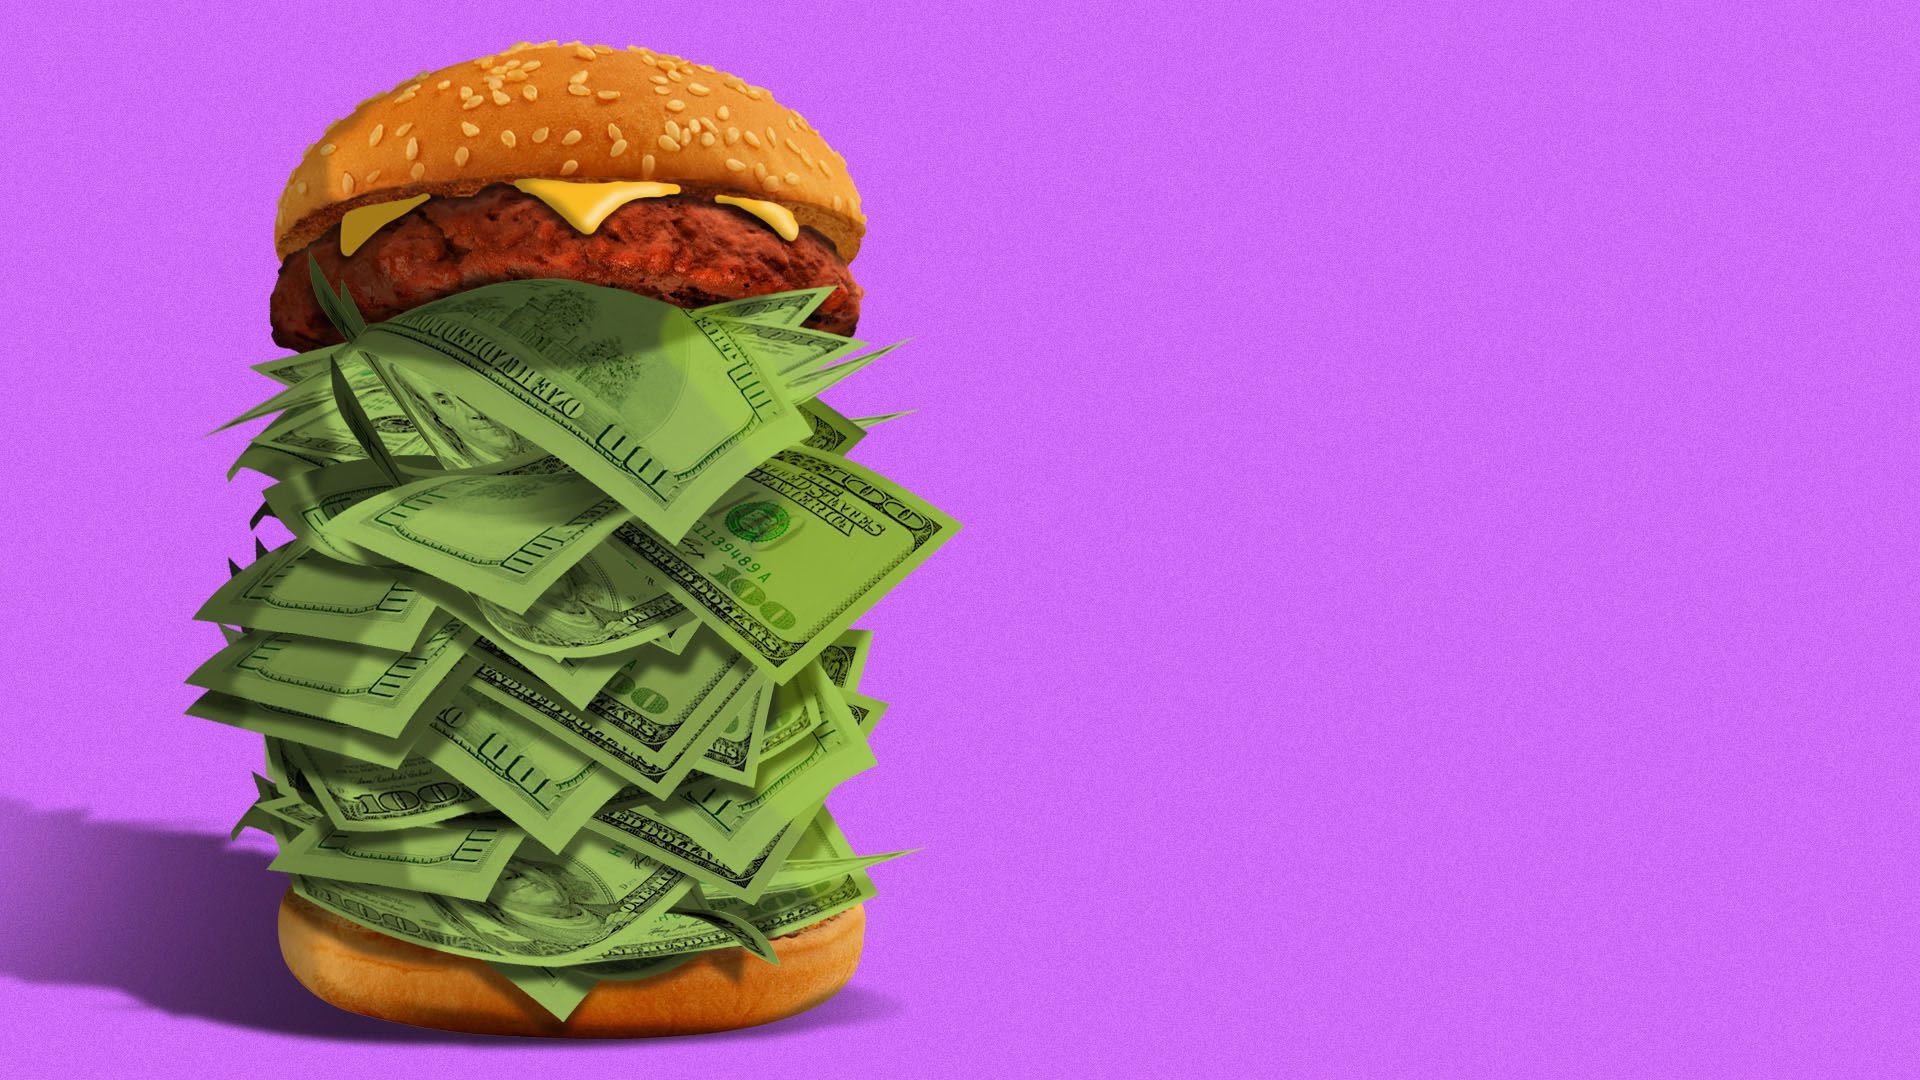 A burger illustration filled with cash